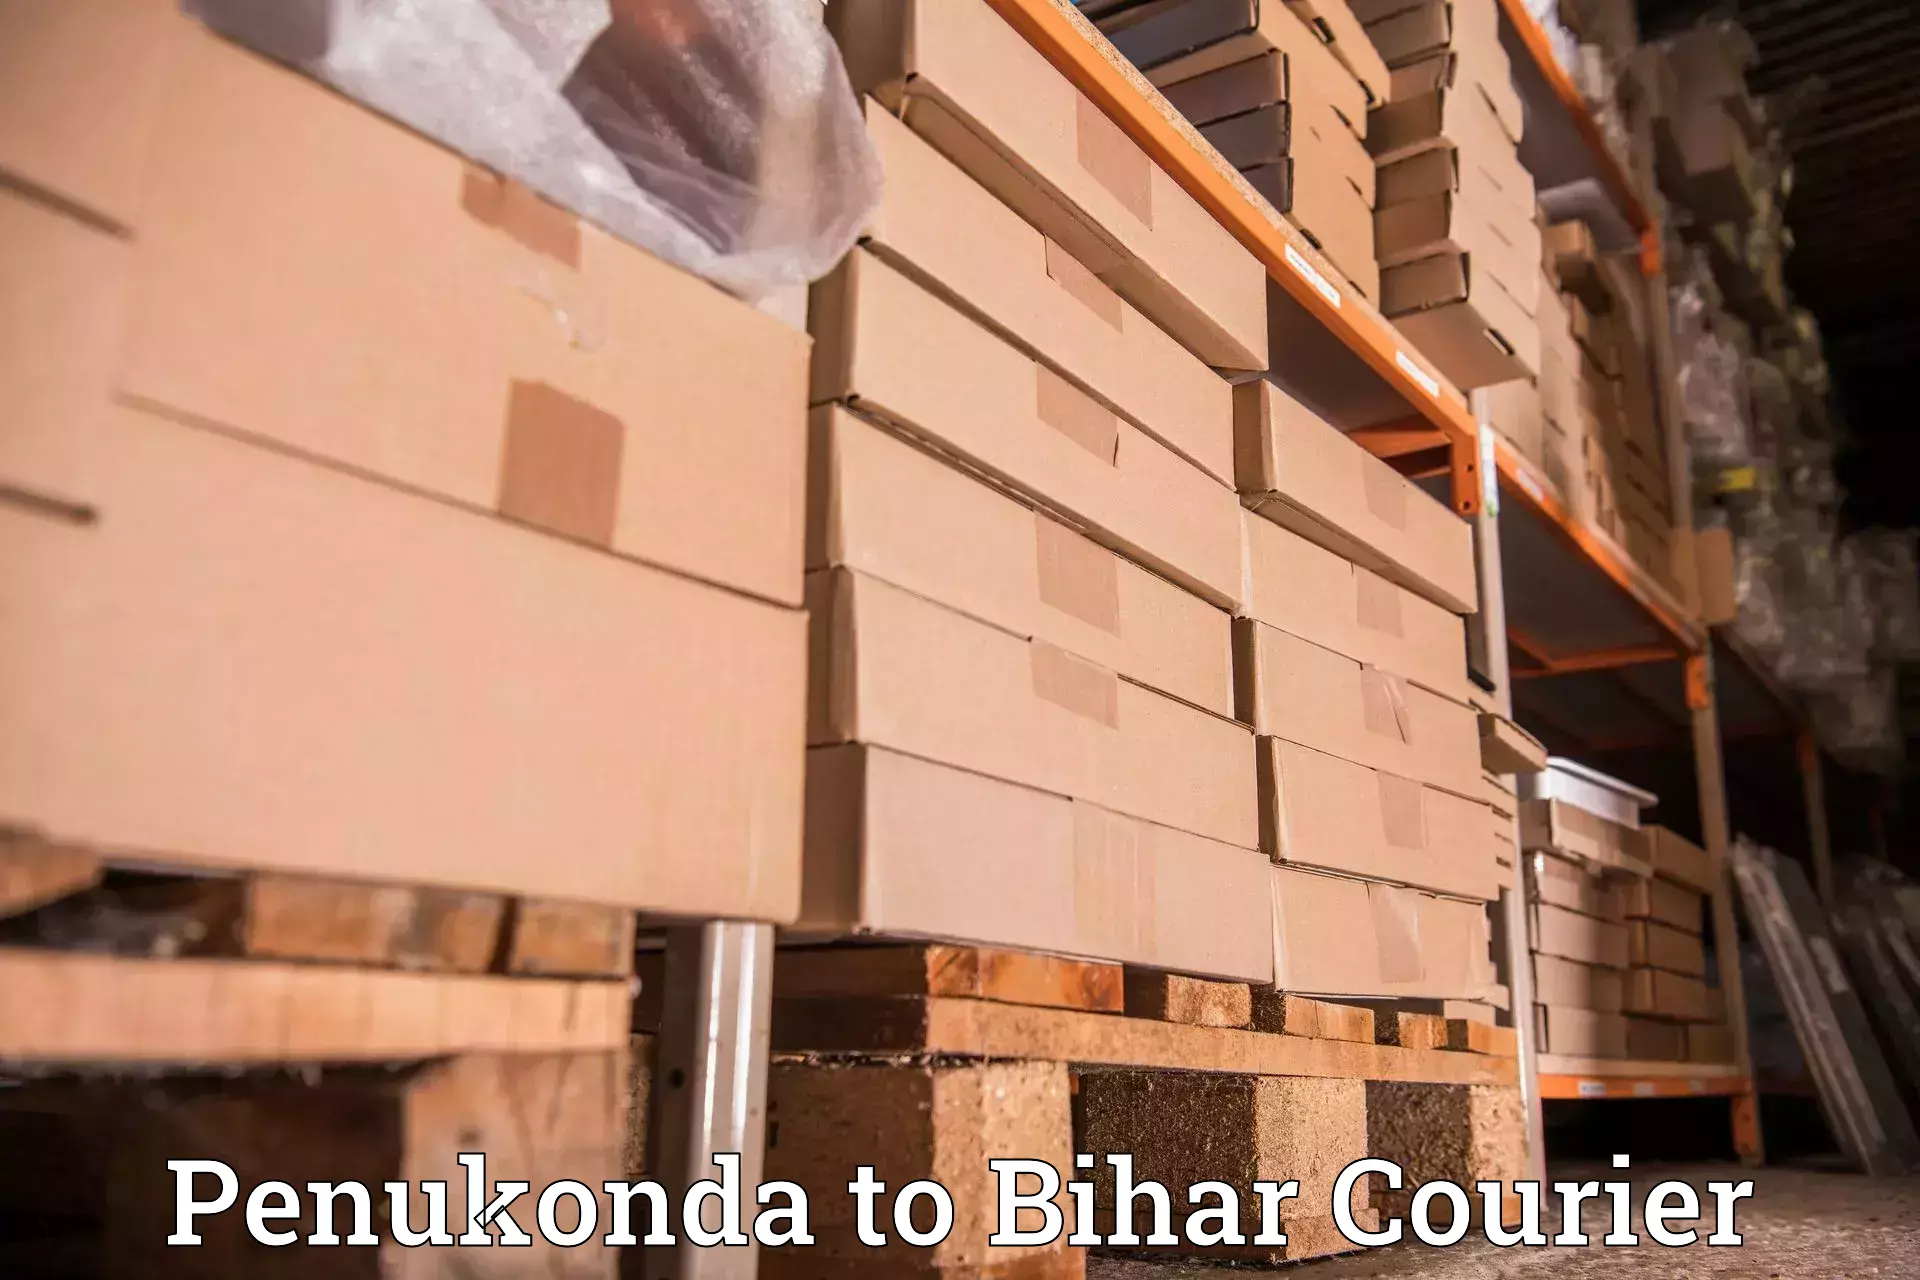 Global courier networks Penukonda to Bihar